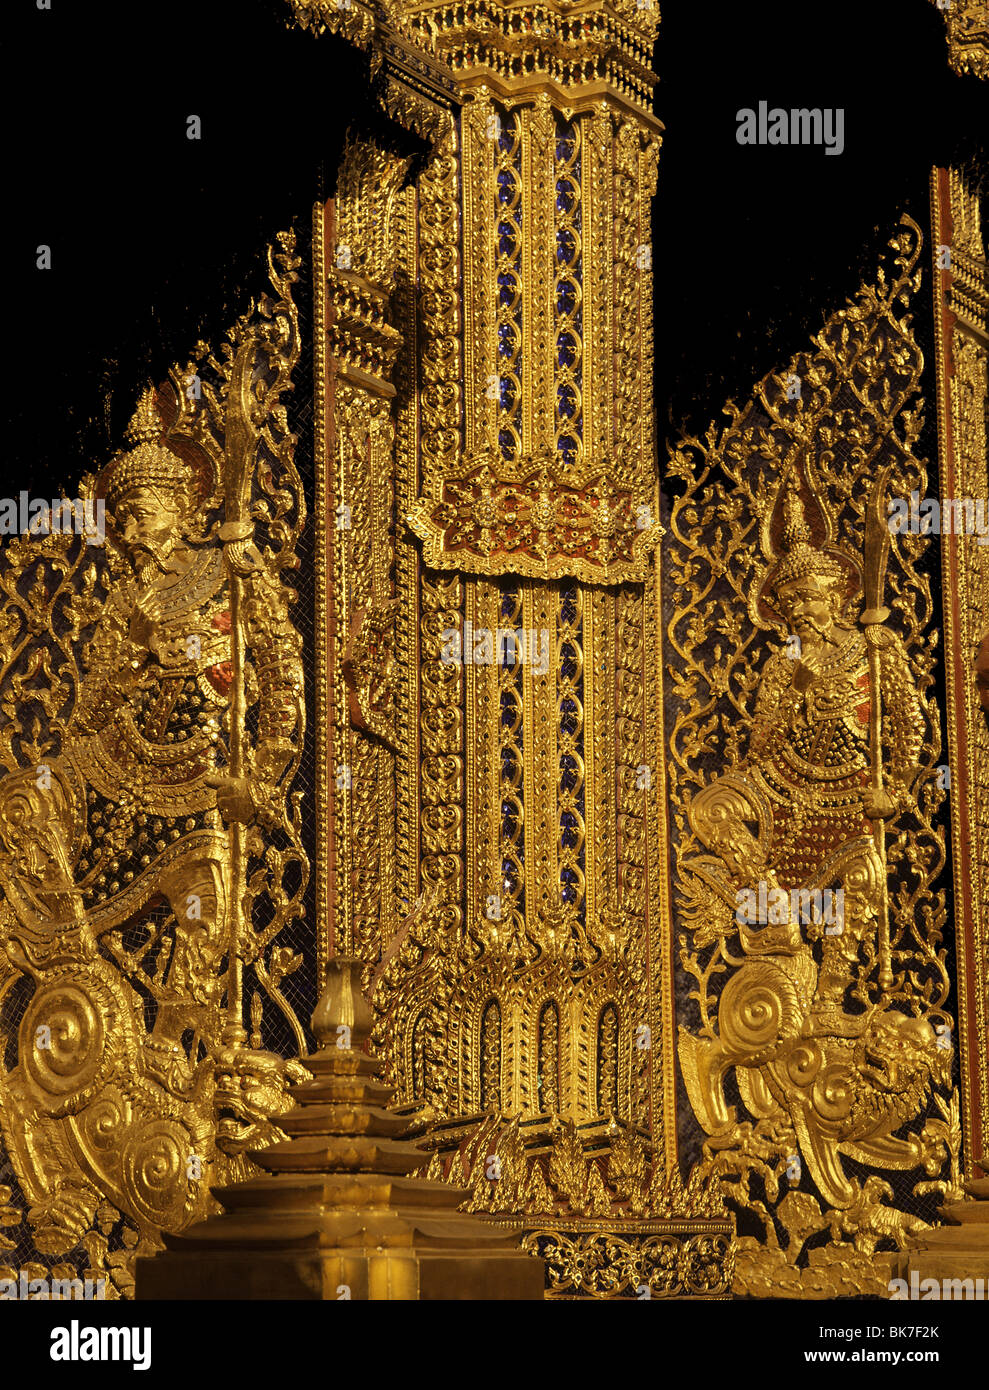 Des portes ornées de Wat Rajabopitr, Bangkok, Thaïlande, Asie du Sud, Asie Banque D'Images